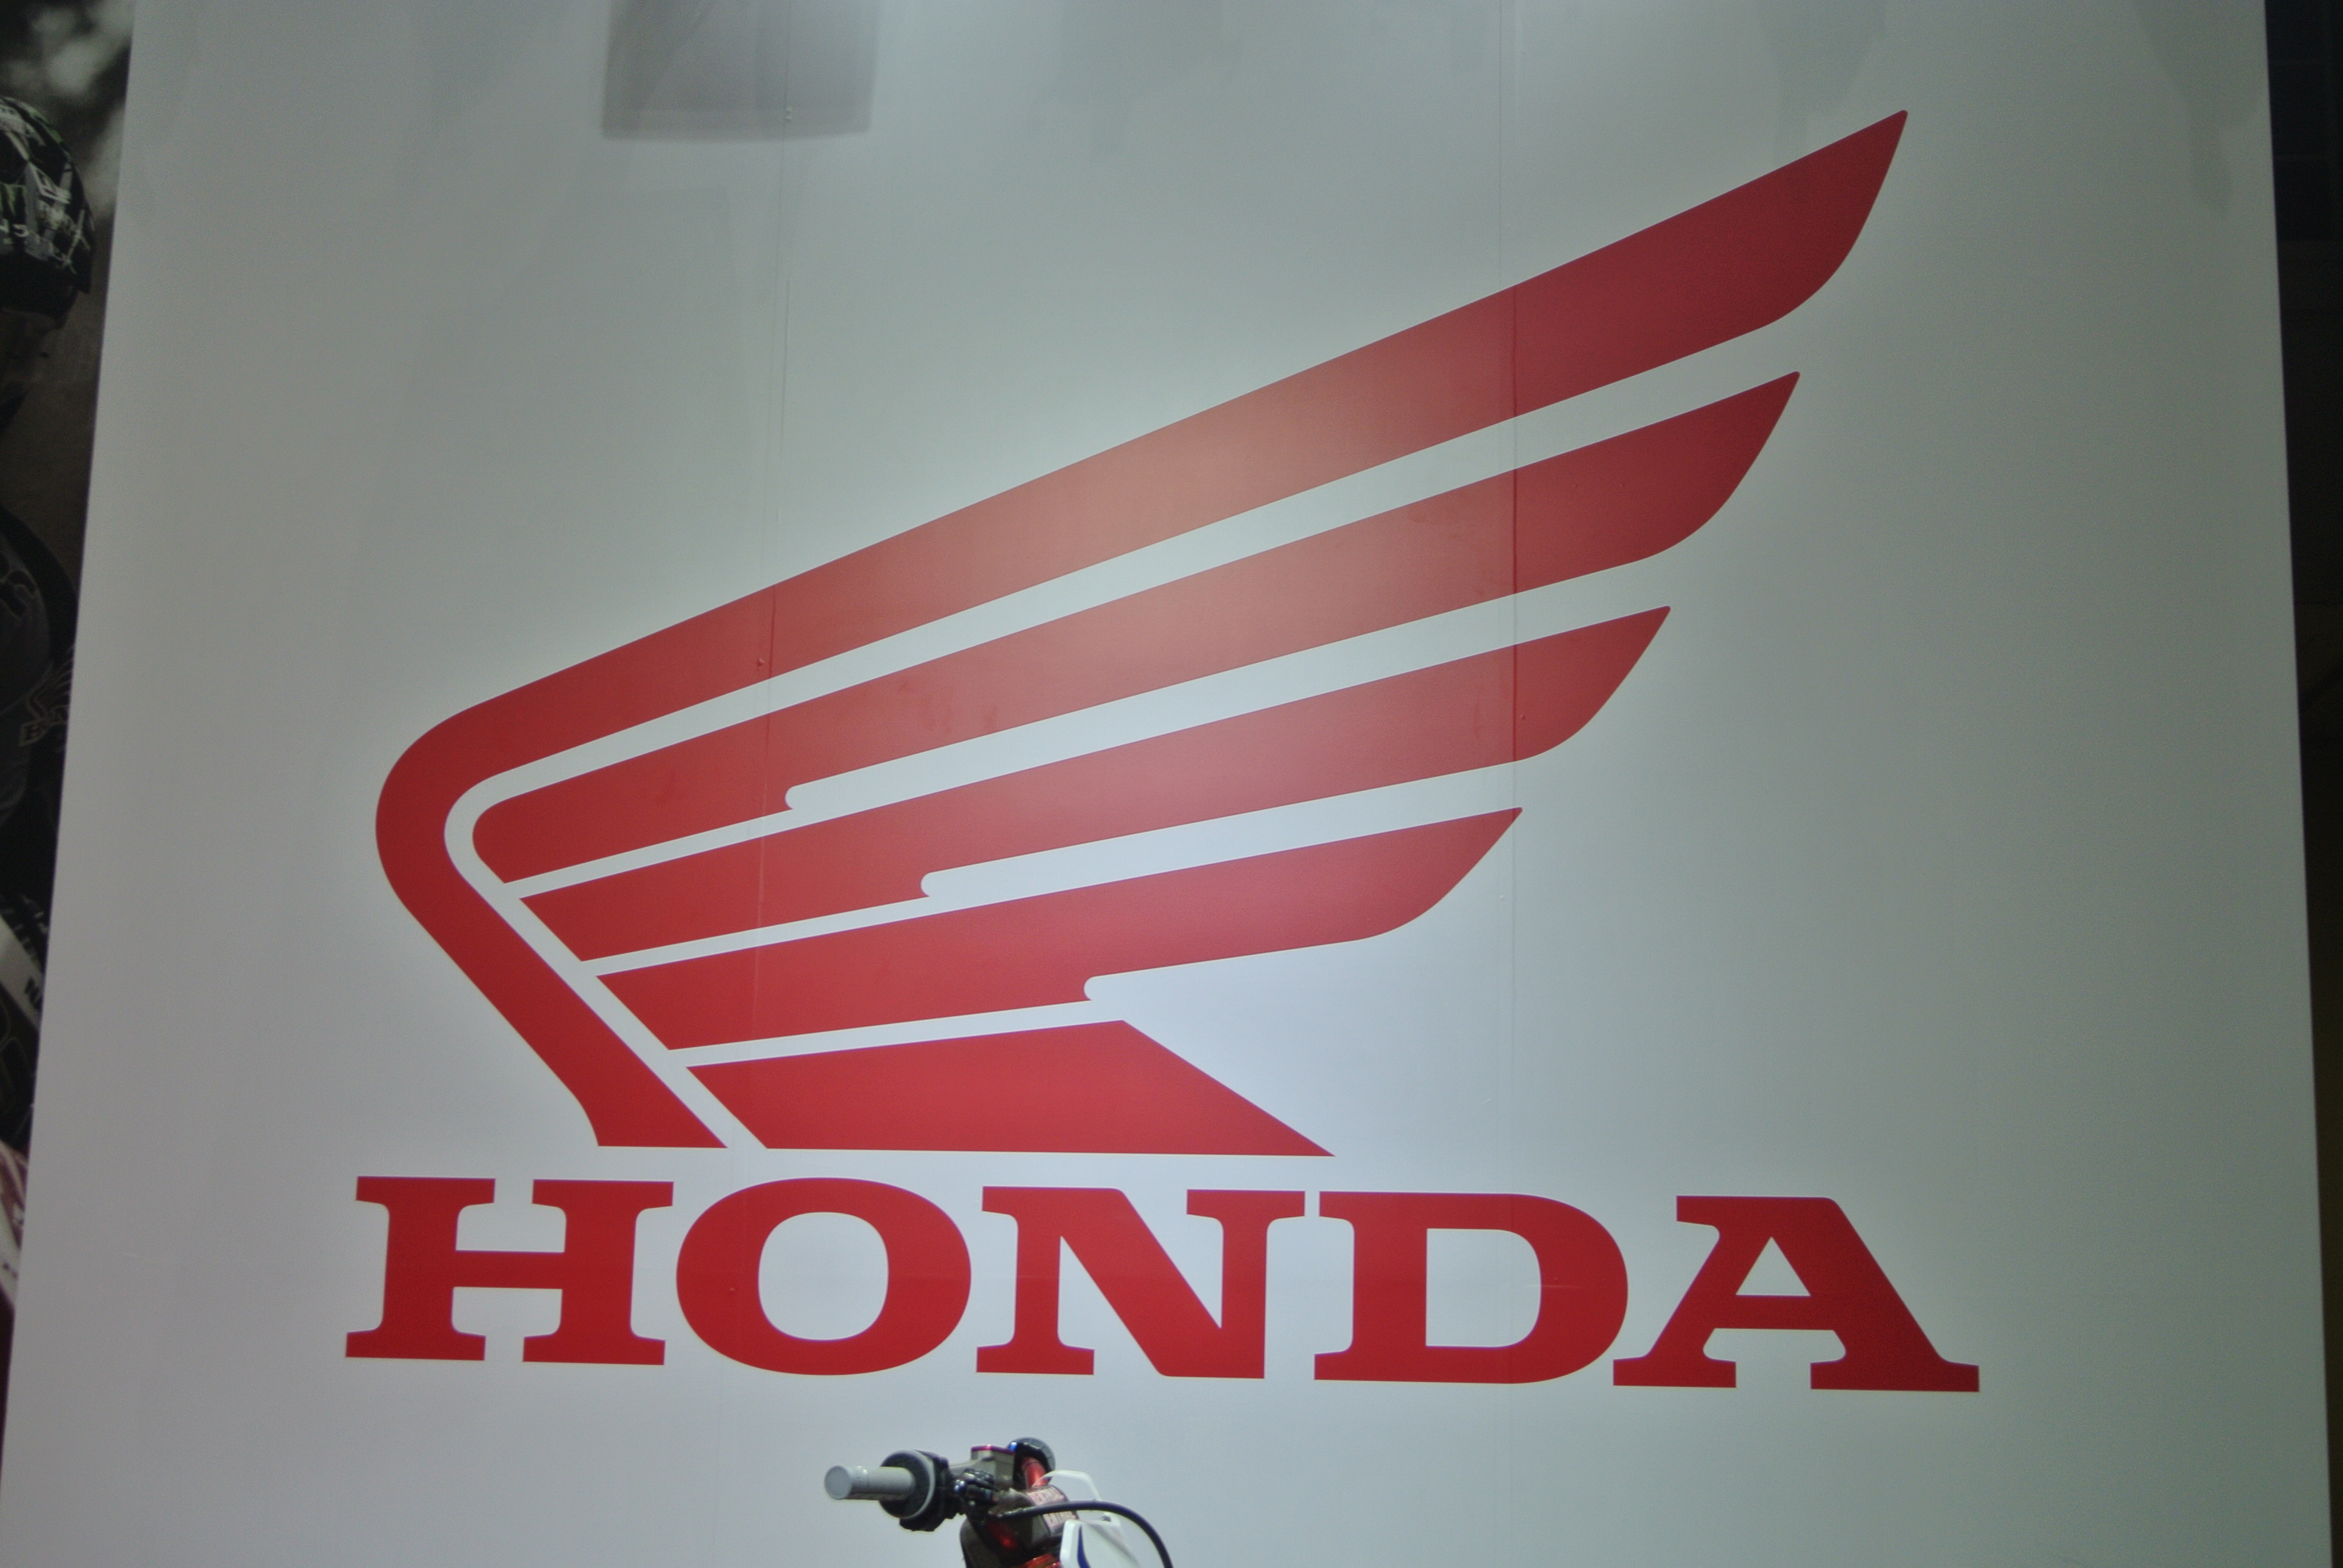 「Honda Motorcycle Fes 2021」特設サイト公開